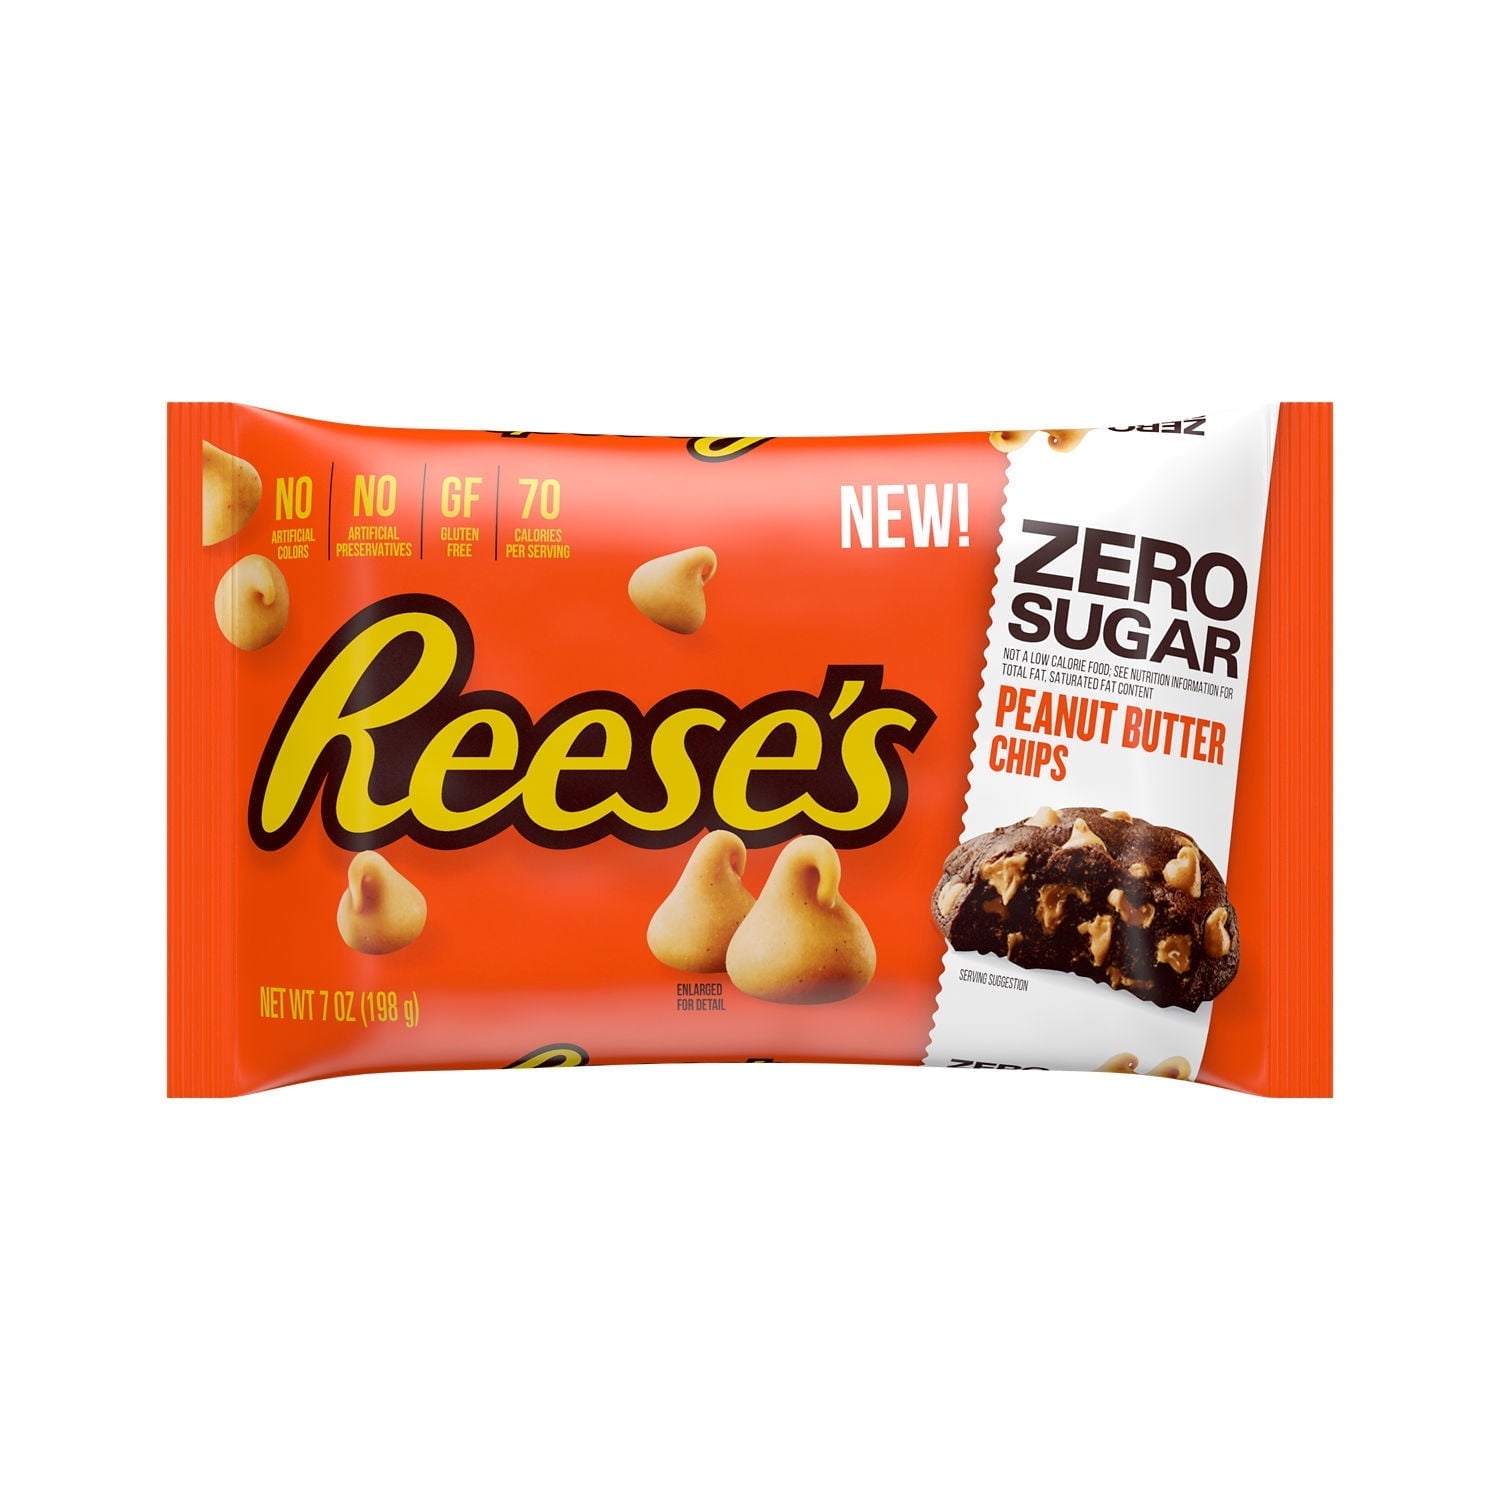 Hershey's Reese's Zero Sugar Peanut Butter Baking Chips, 7 oz